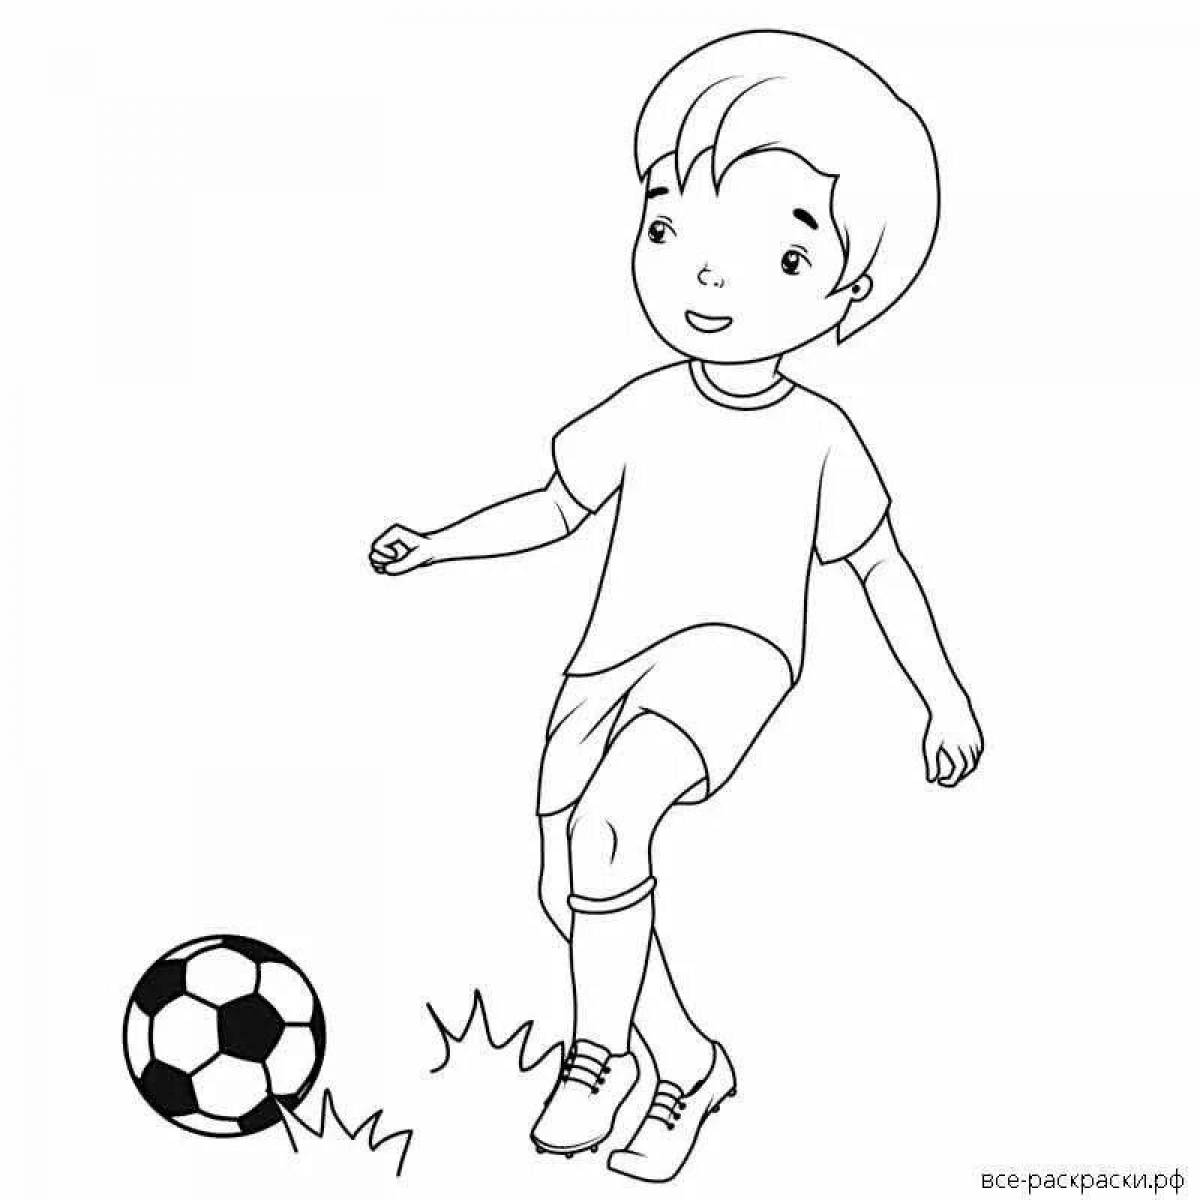 Kids soccer player #1